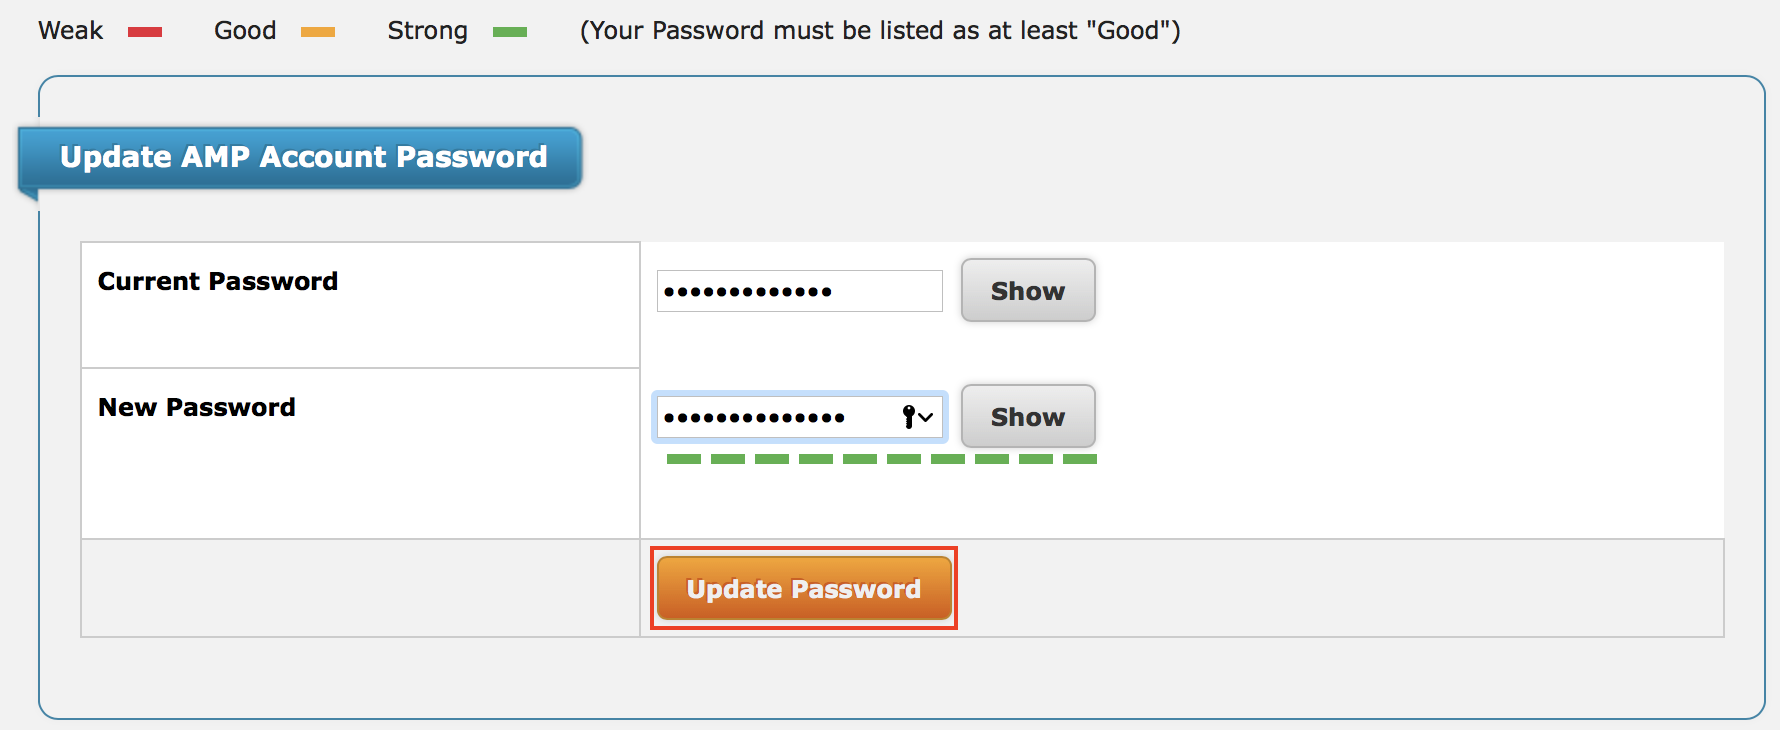 Update Password button highlighted.